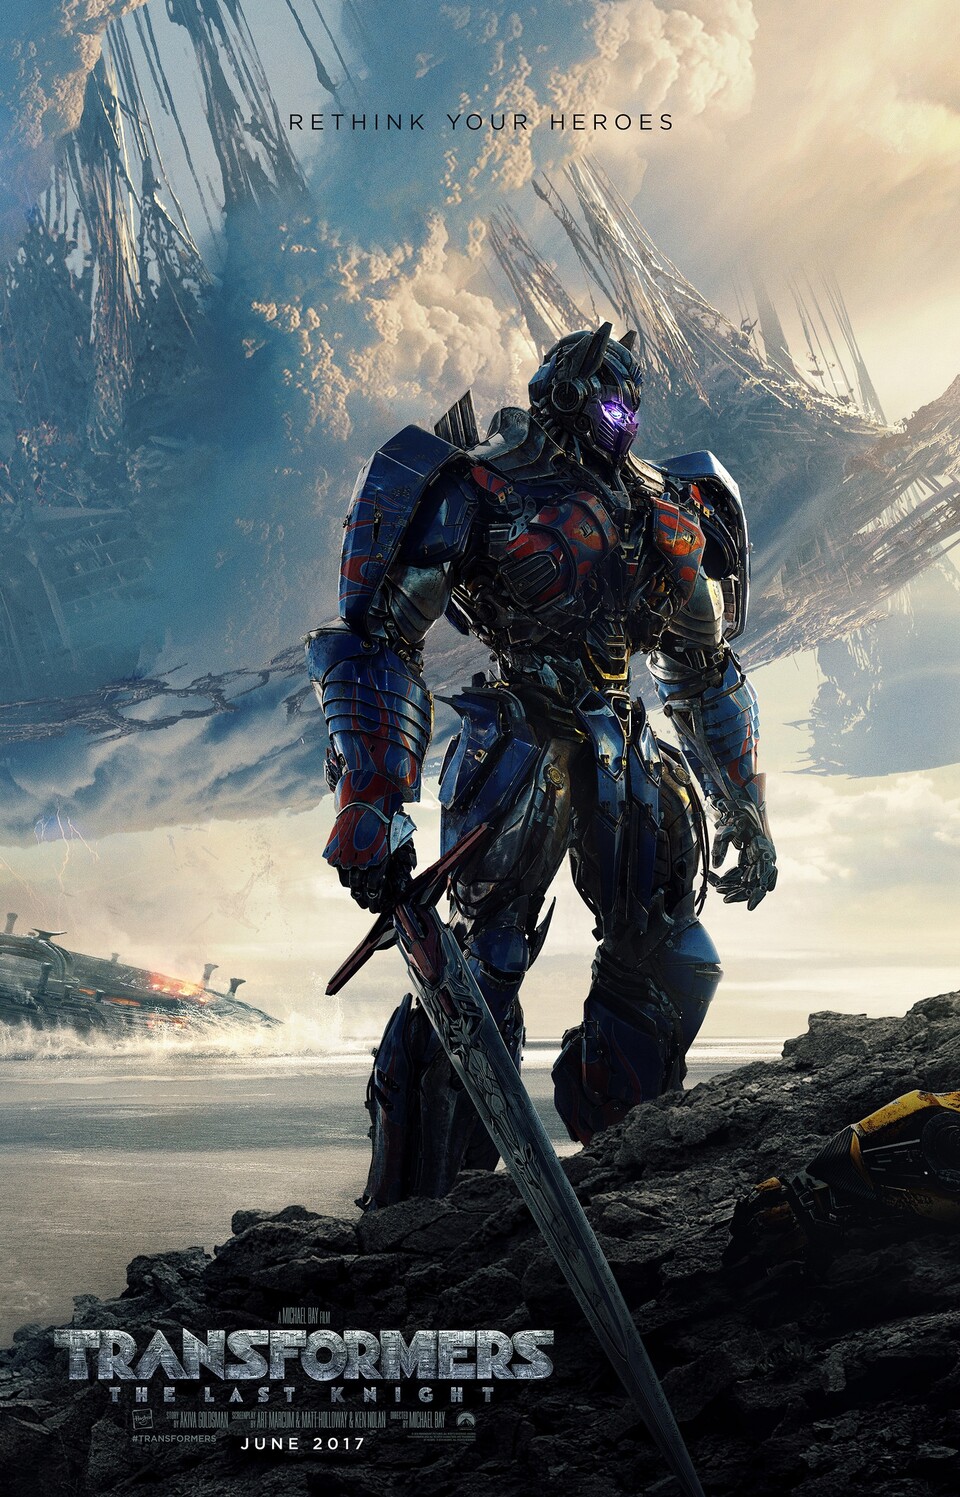 Poster zu Transformers 5: The Last Knight.